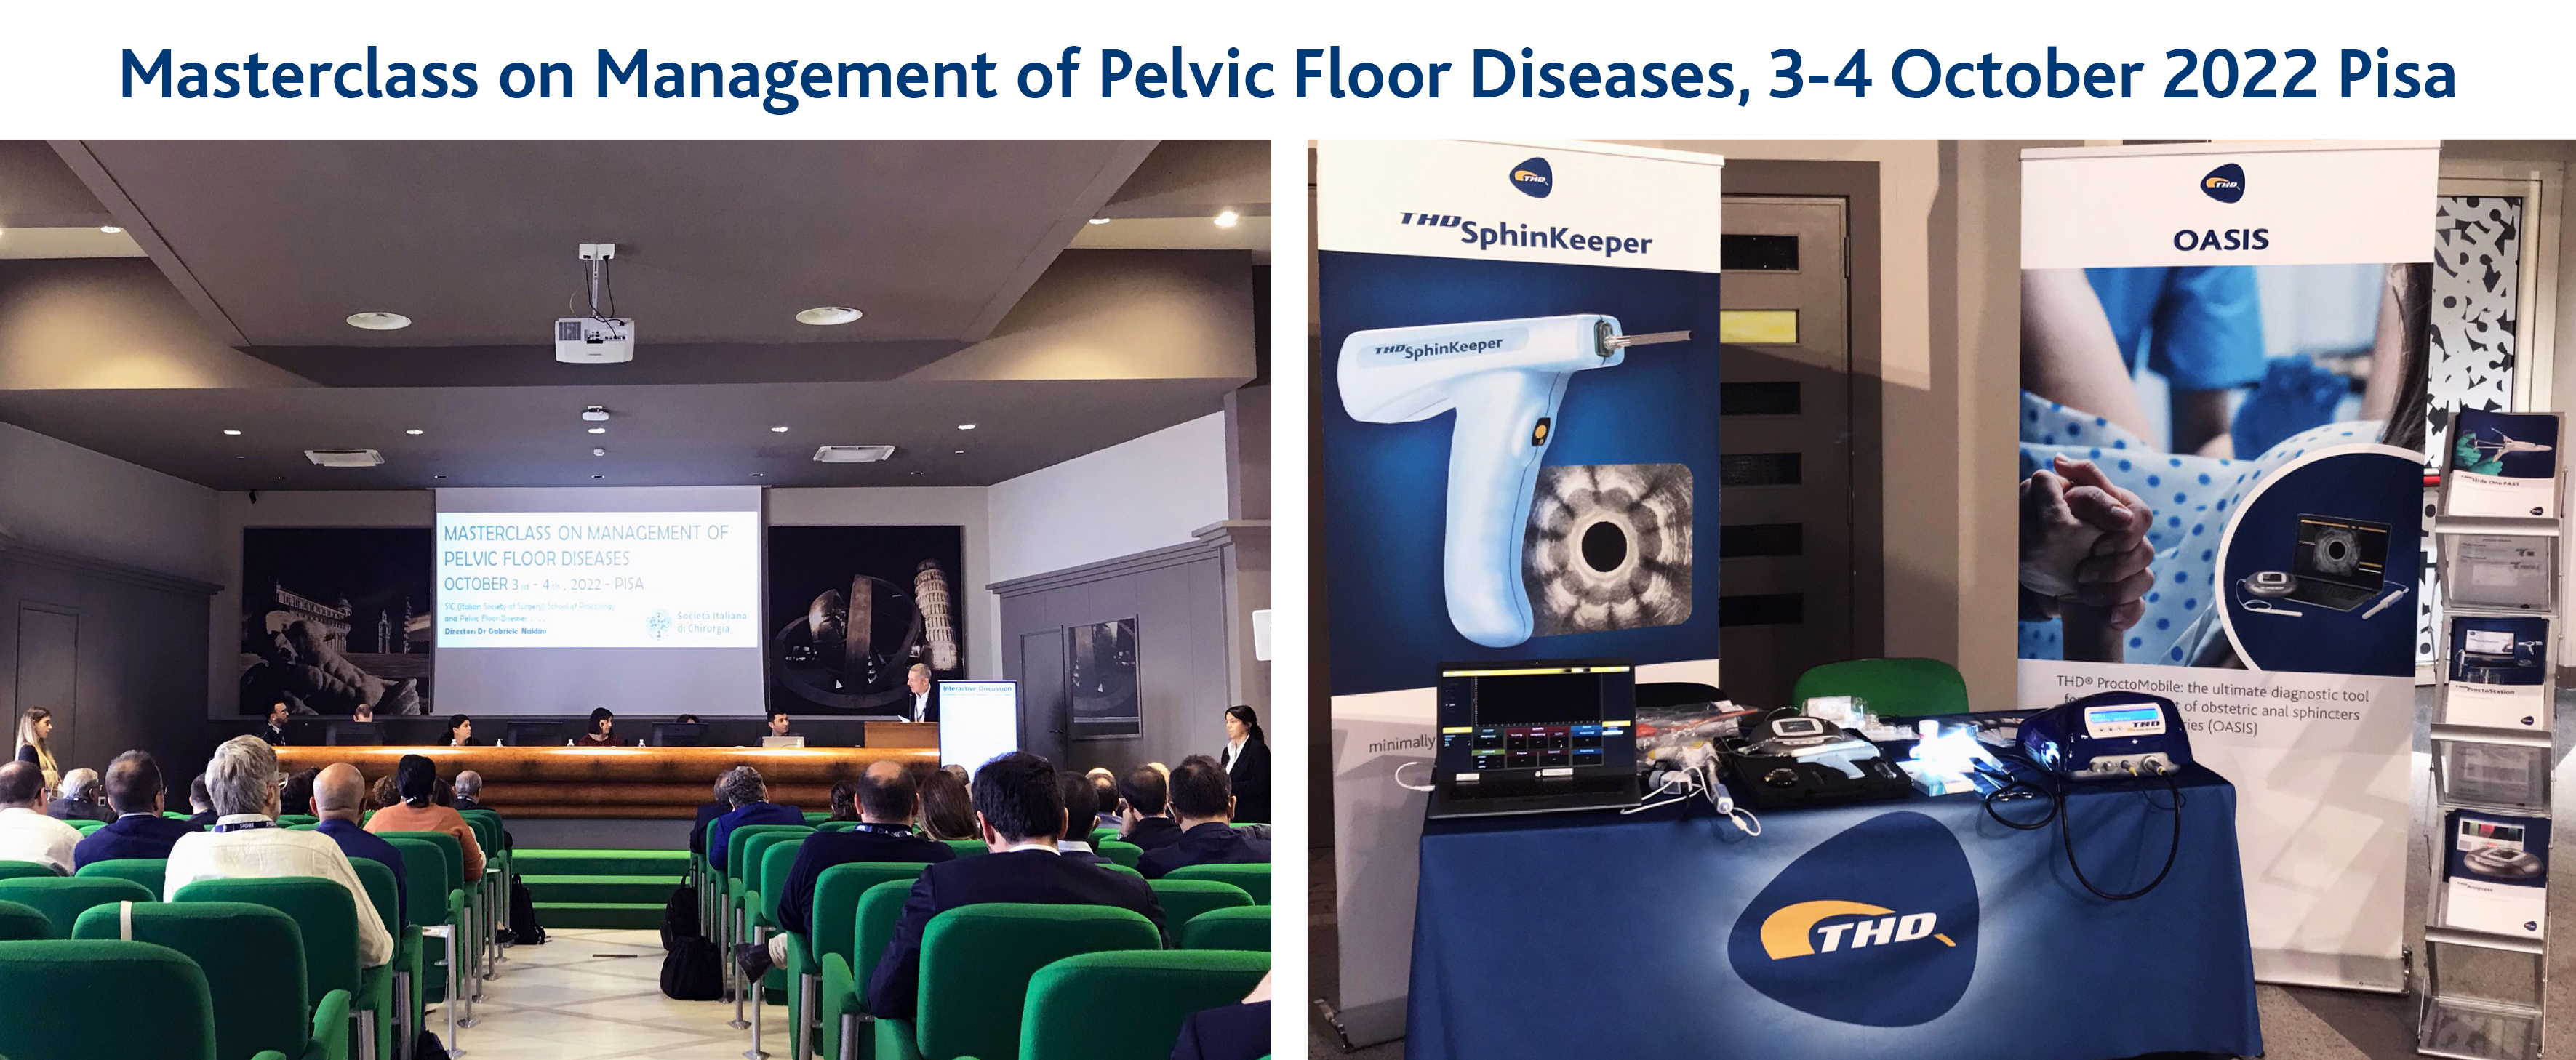 Il 3-4 ottobre THD era a Pisa per partecipare al Masterclass on Management of Pelvic Floor Diseases.